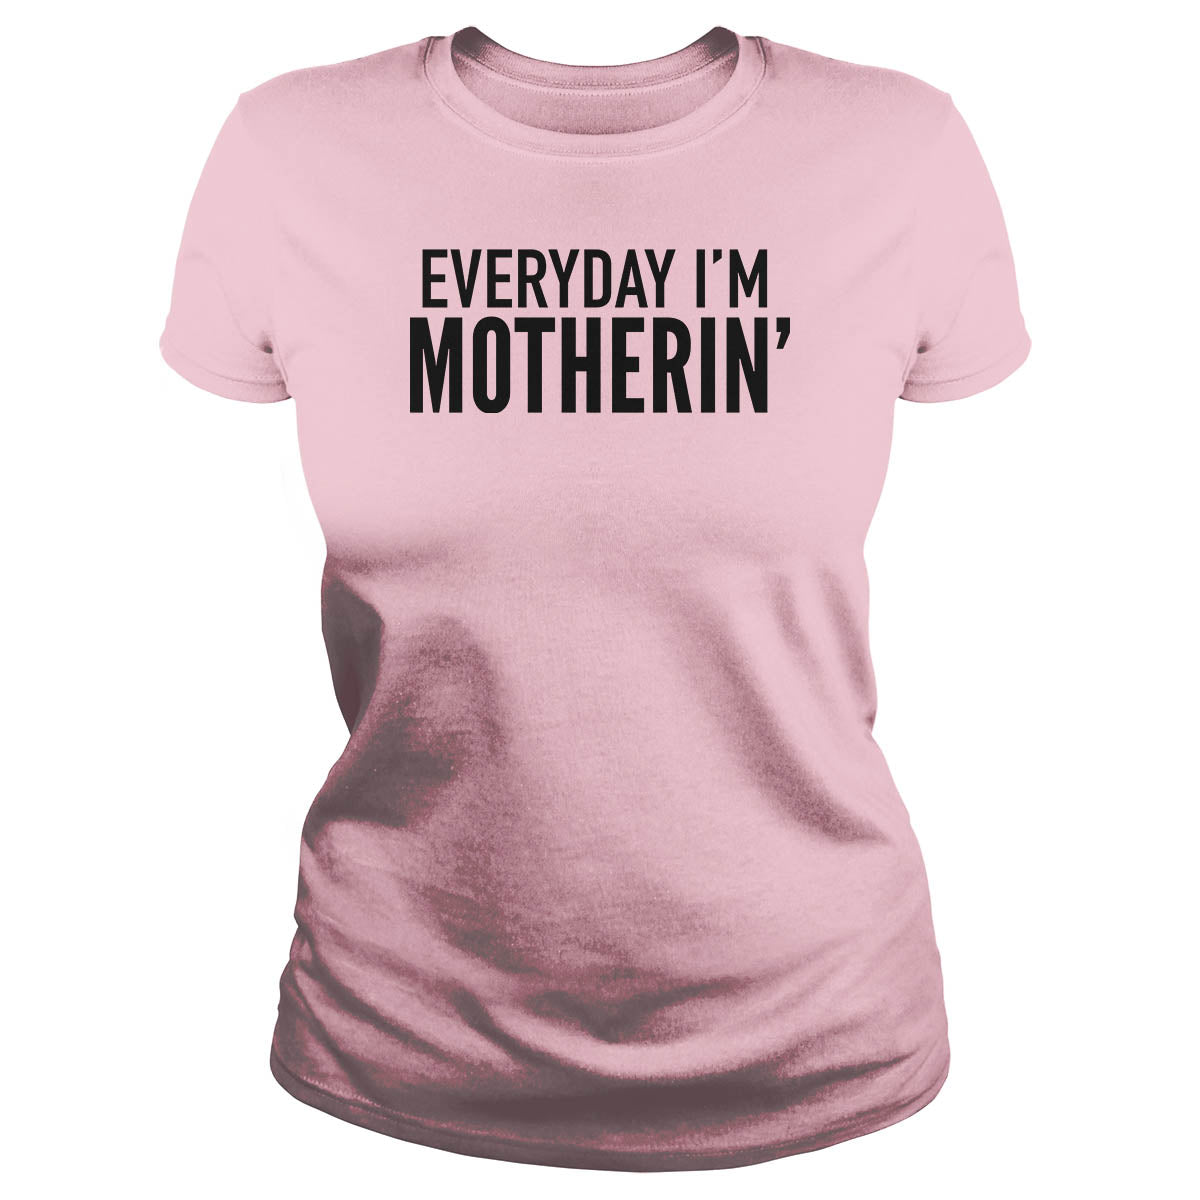 Everyday I'm Motherin'